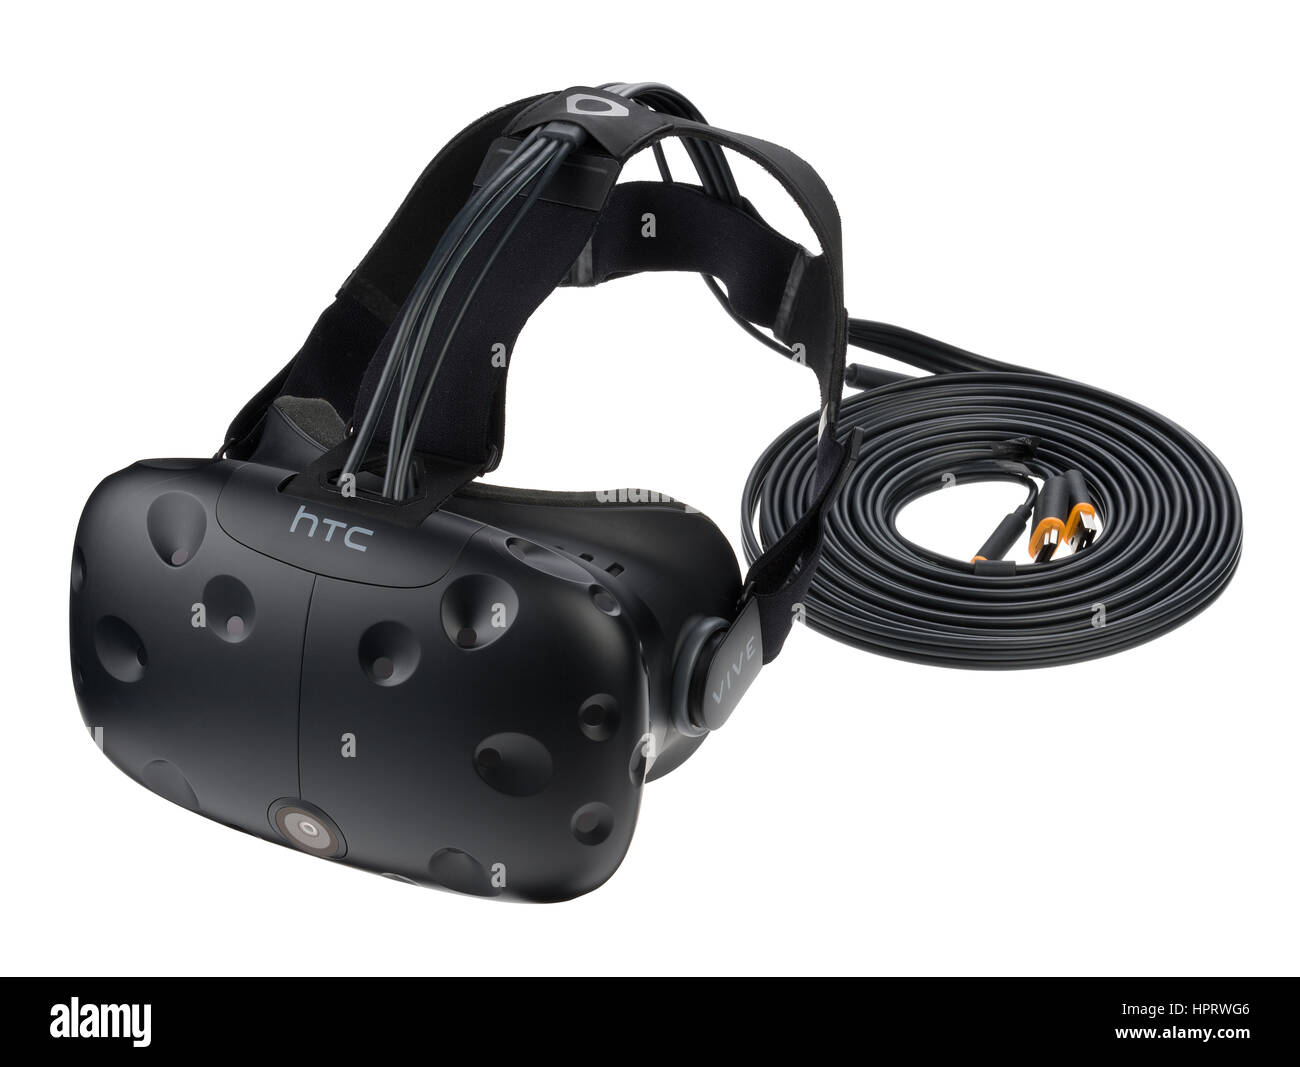 HTC Vive virtual reality hardware. VR Headset. Stock Photo